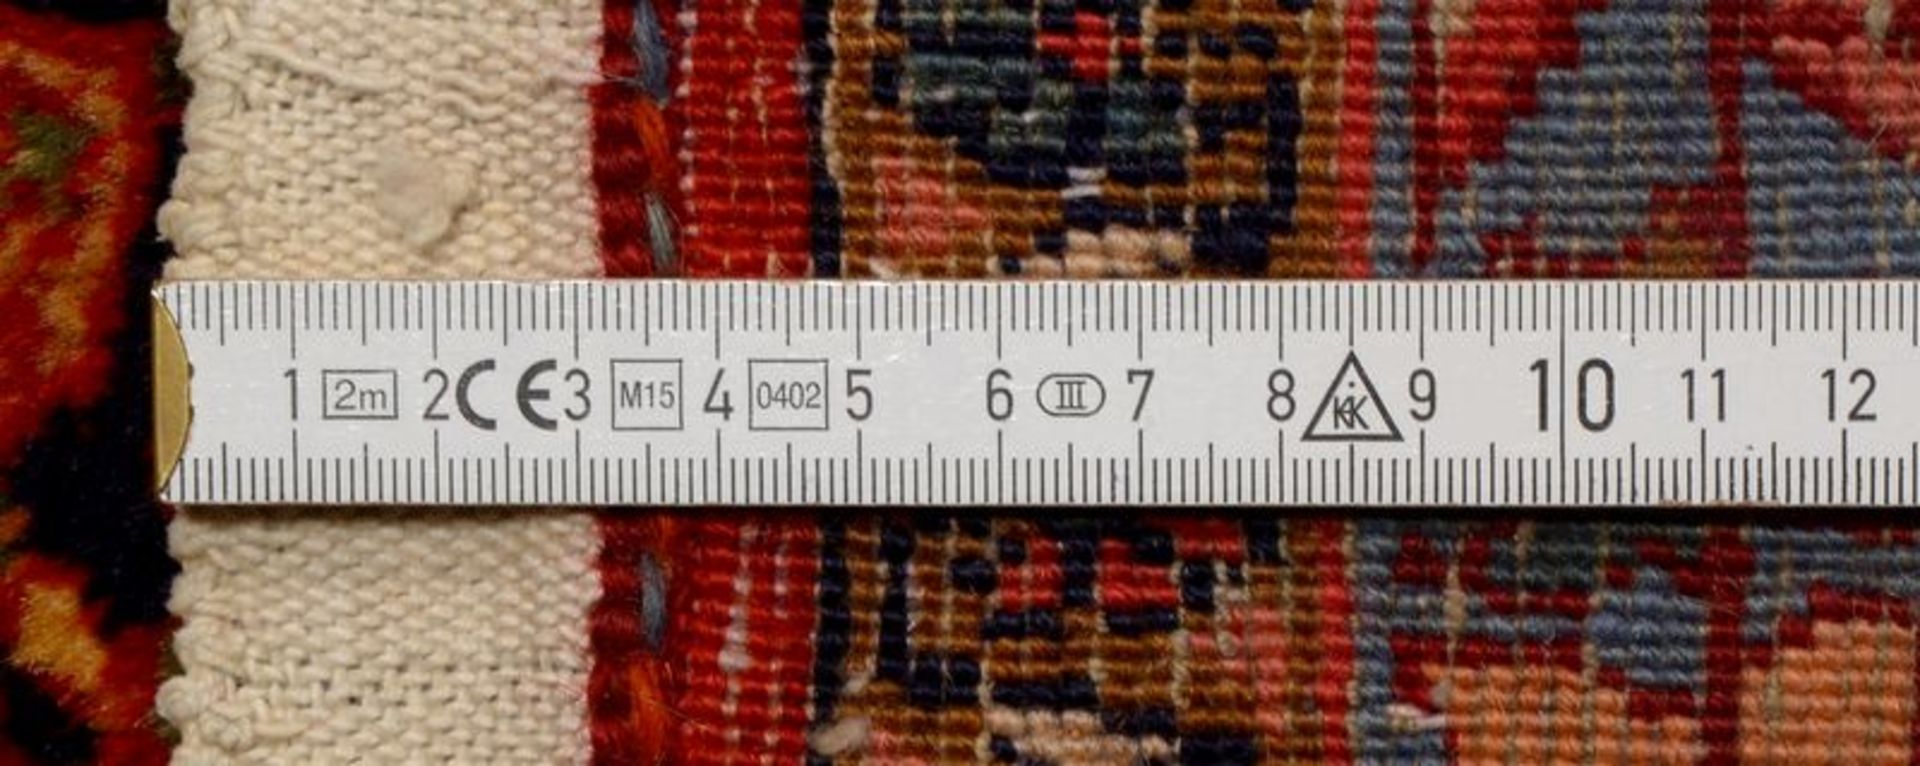 Bidjar, Herati-Muster, mit Rosenmedaillon, hochflorig, in gutem Zustand, wohnfertig (gechlort gewasc - Image 2 of 2